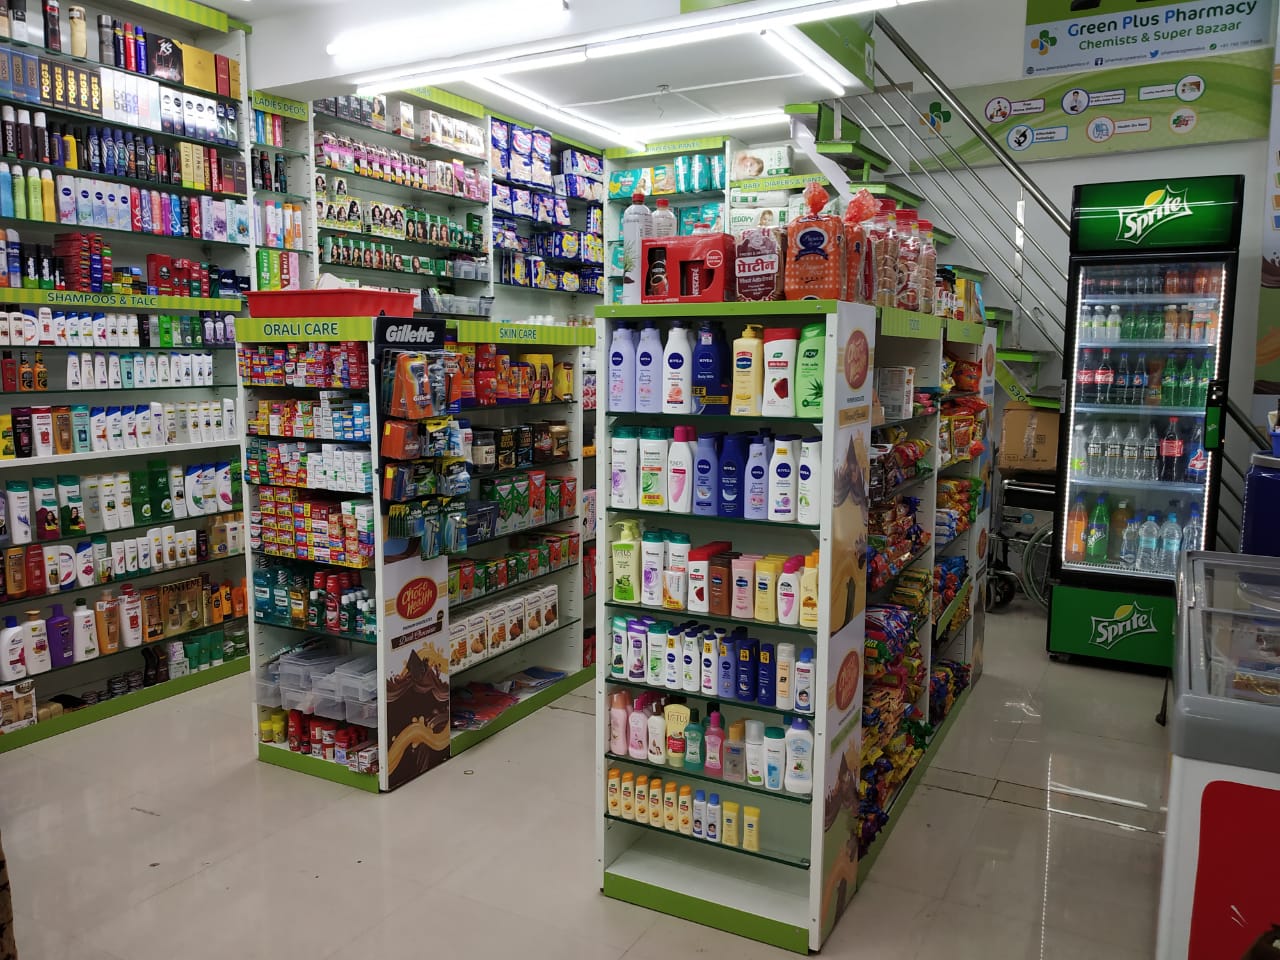 Pridiyos-green-plus-pharmacy